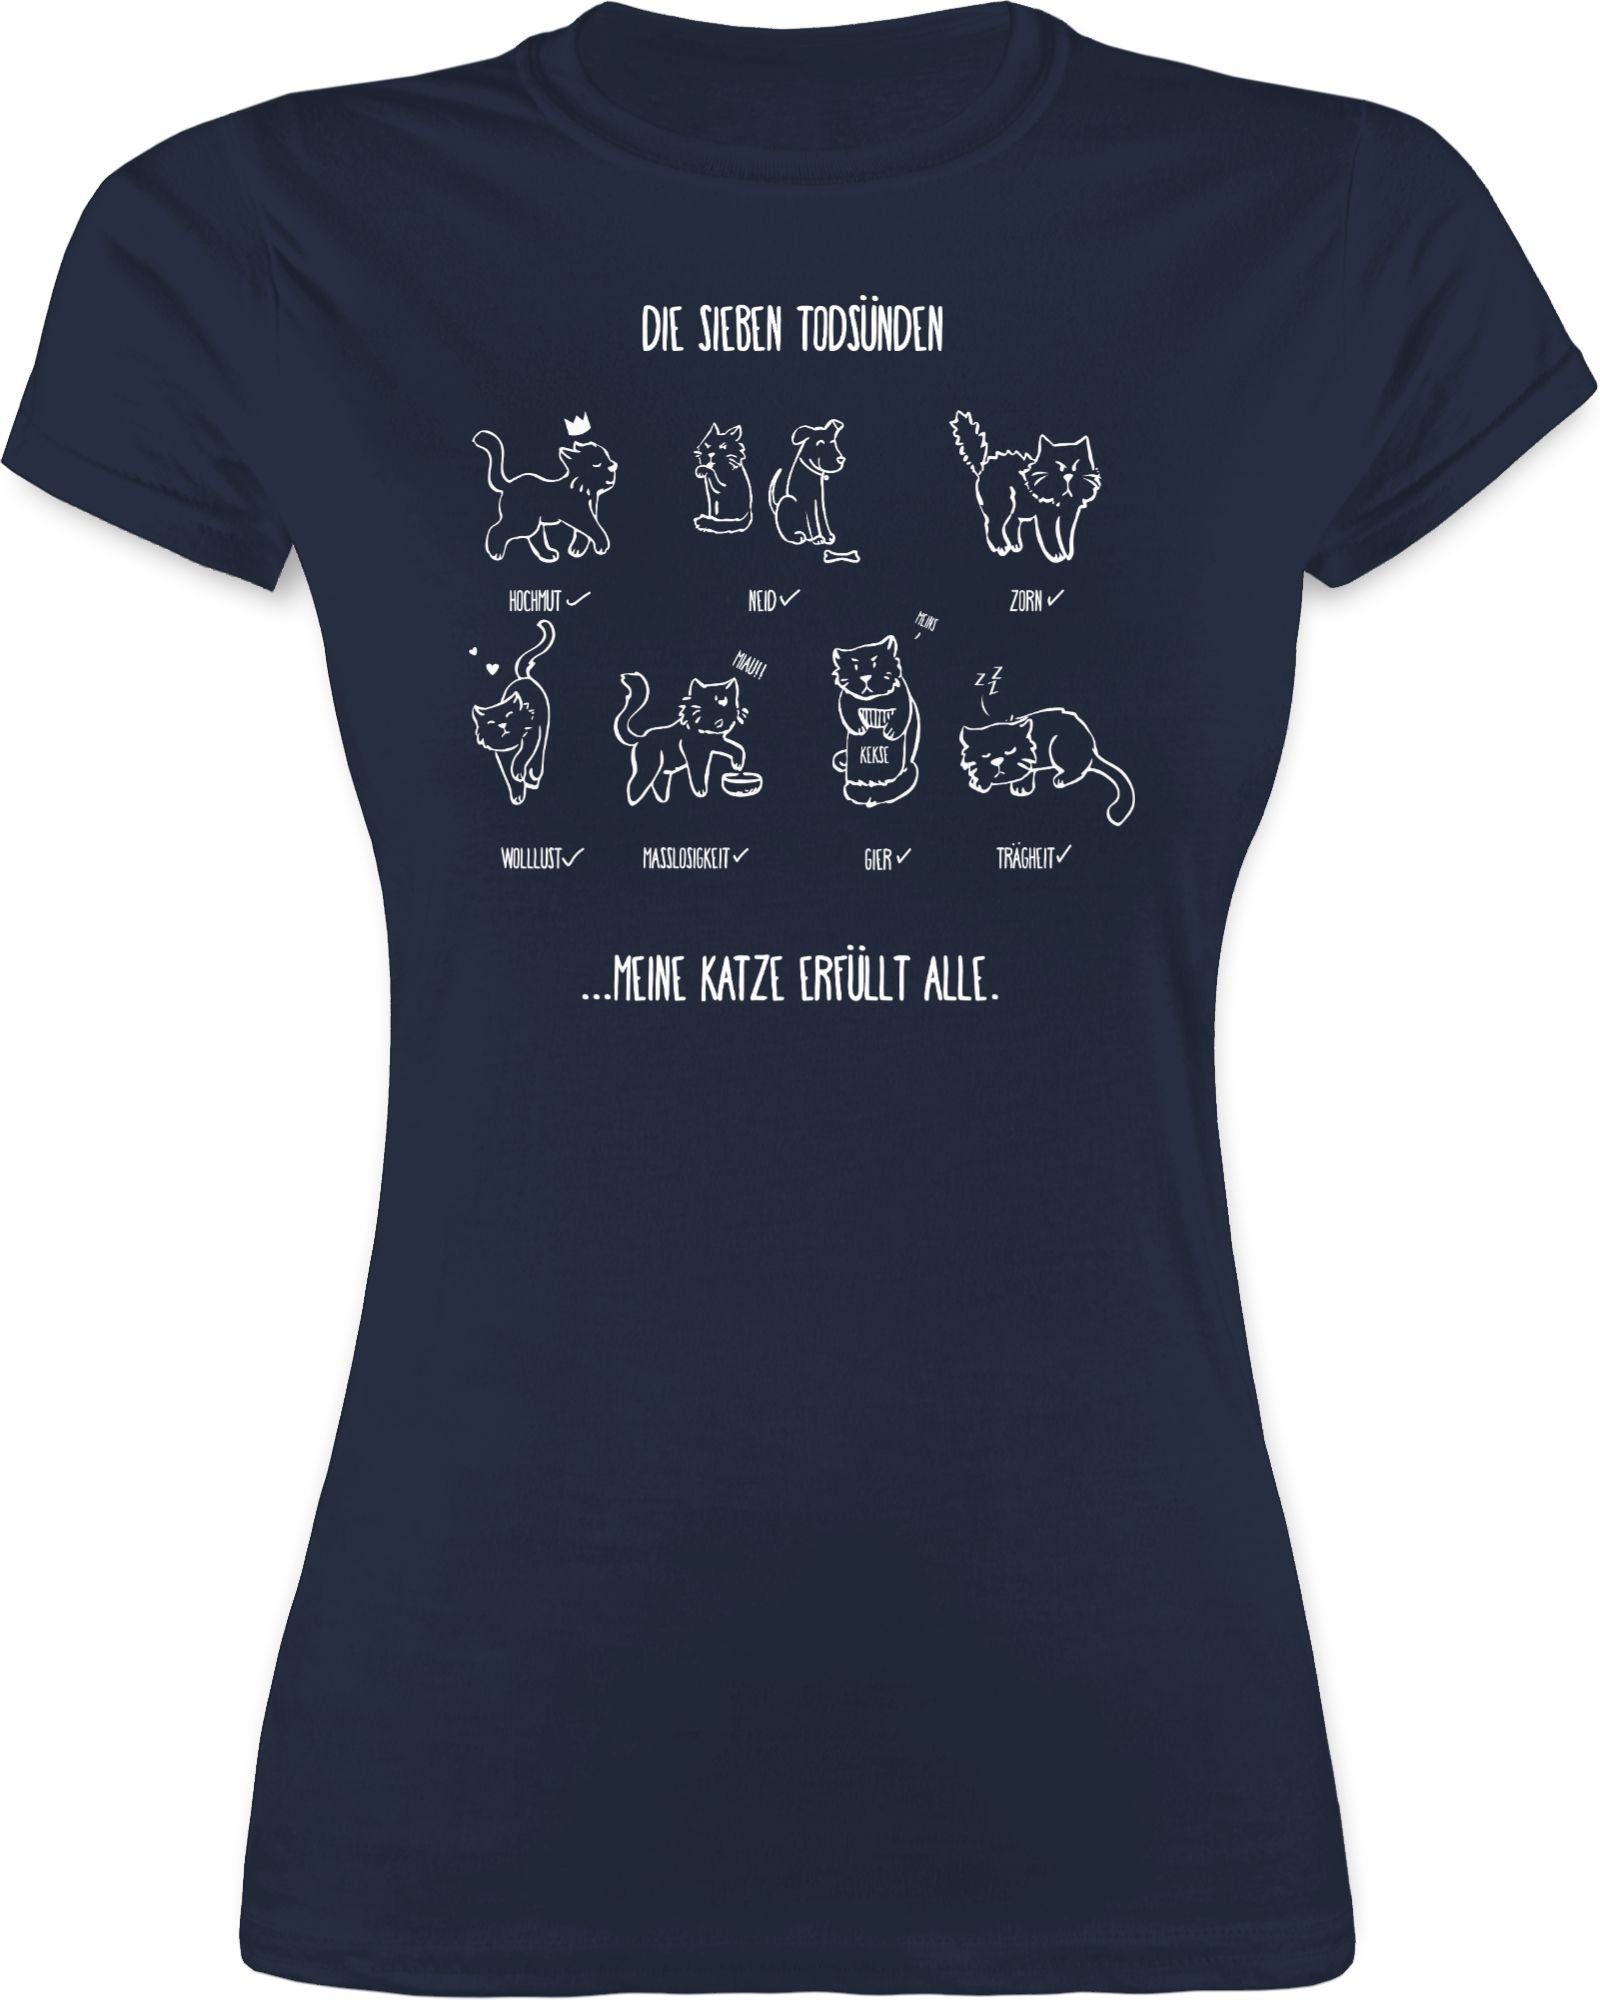 Fun Collection T-Shirt Shirt mit Katze Motiv Geschenk Auswahl lustig bedruckt 